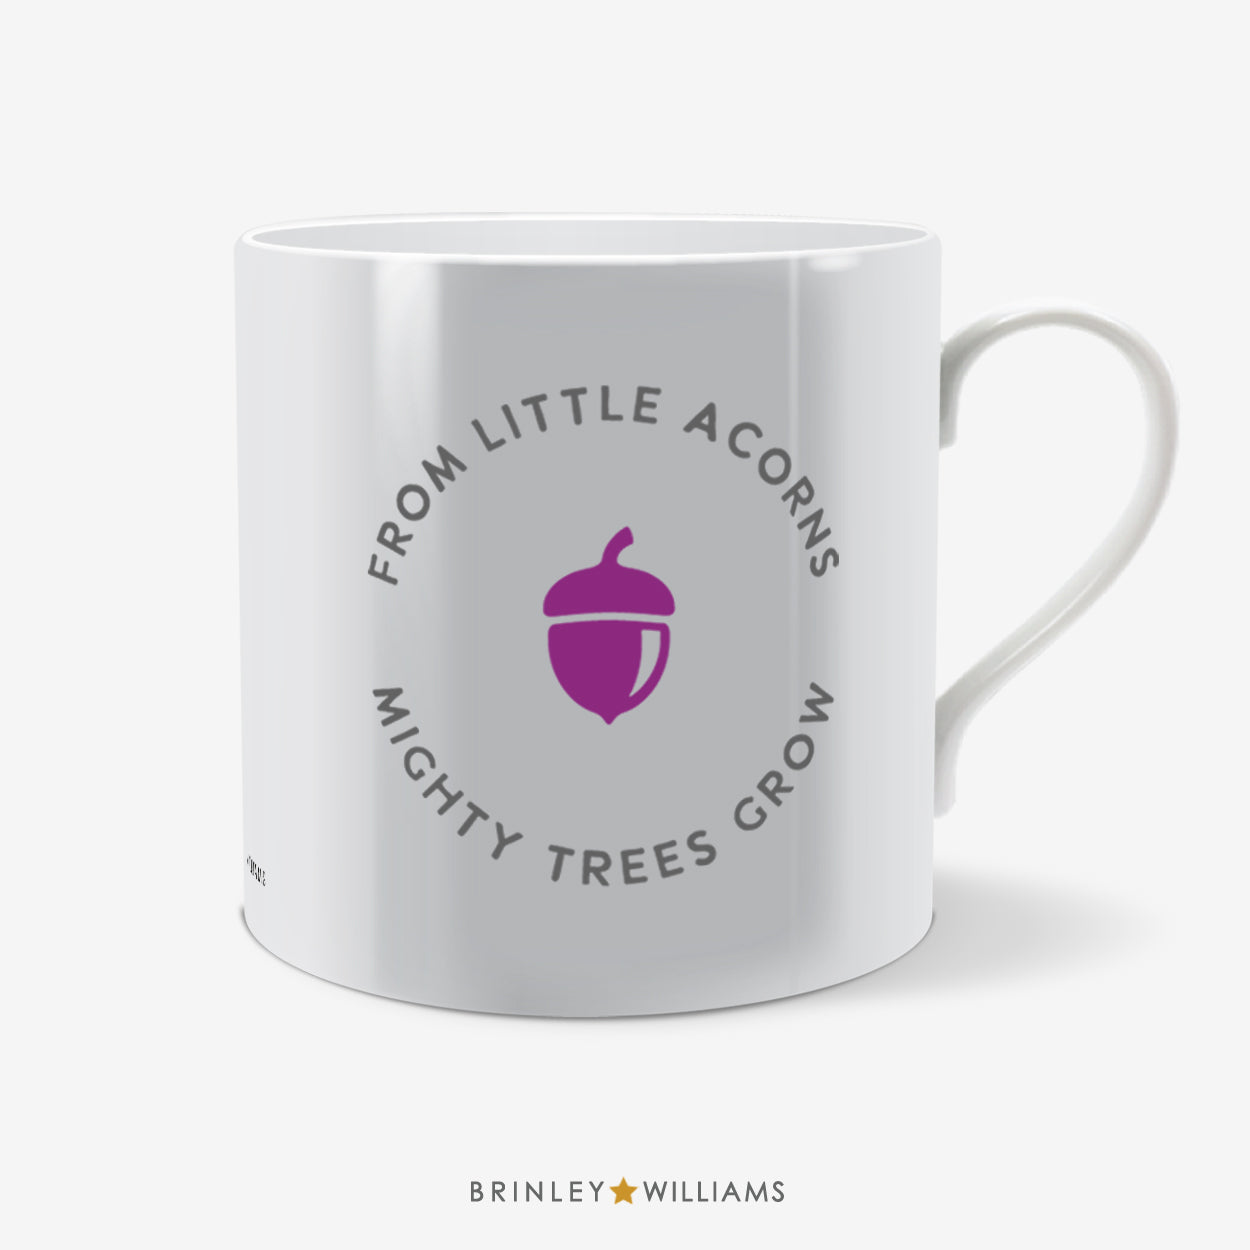 From little acorns mighty trees grow Fun Mug - Purple